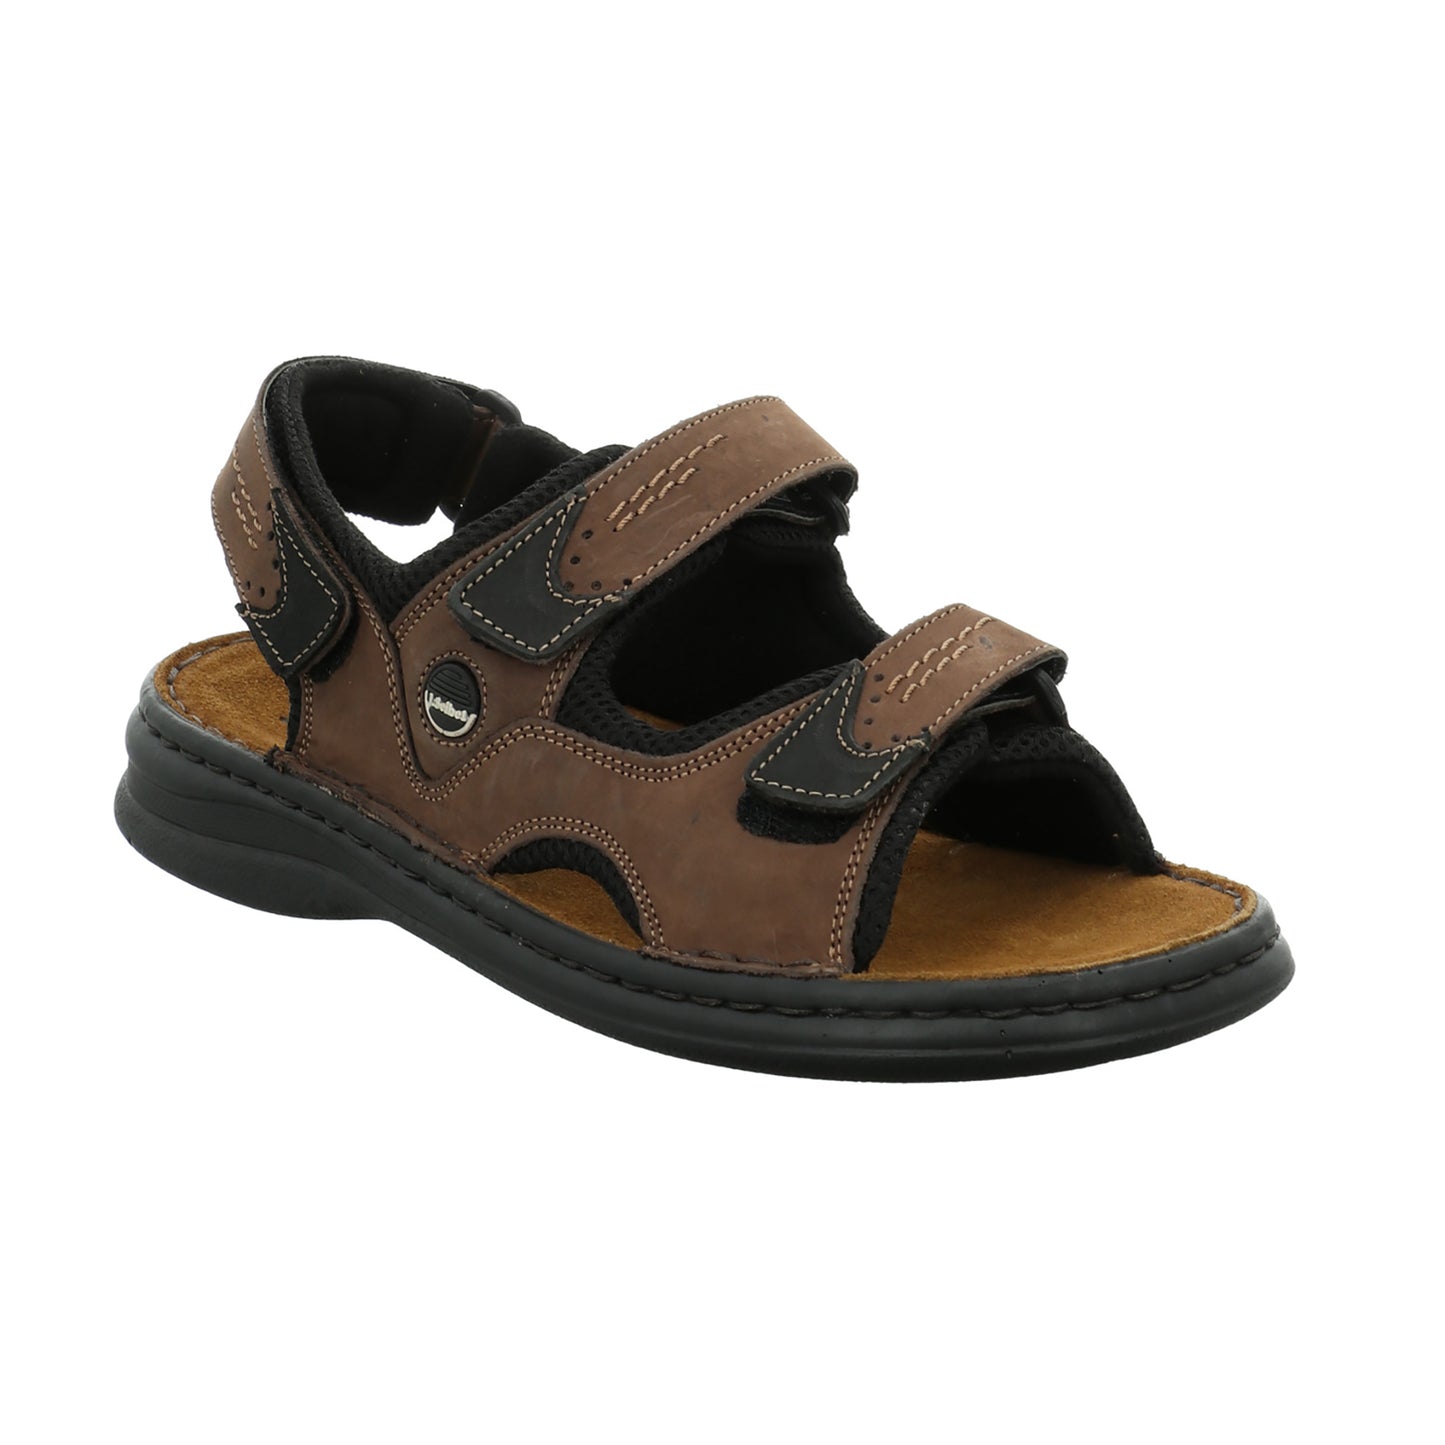 Josef Seibel 10236 11 341 Franklyn Brown/Black Velcro Sandals